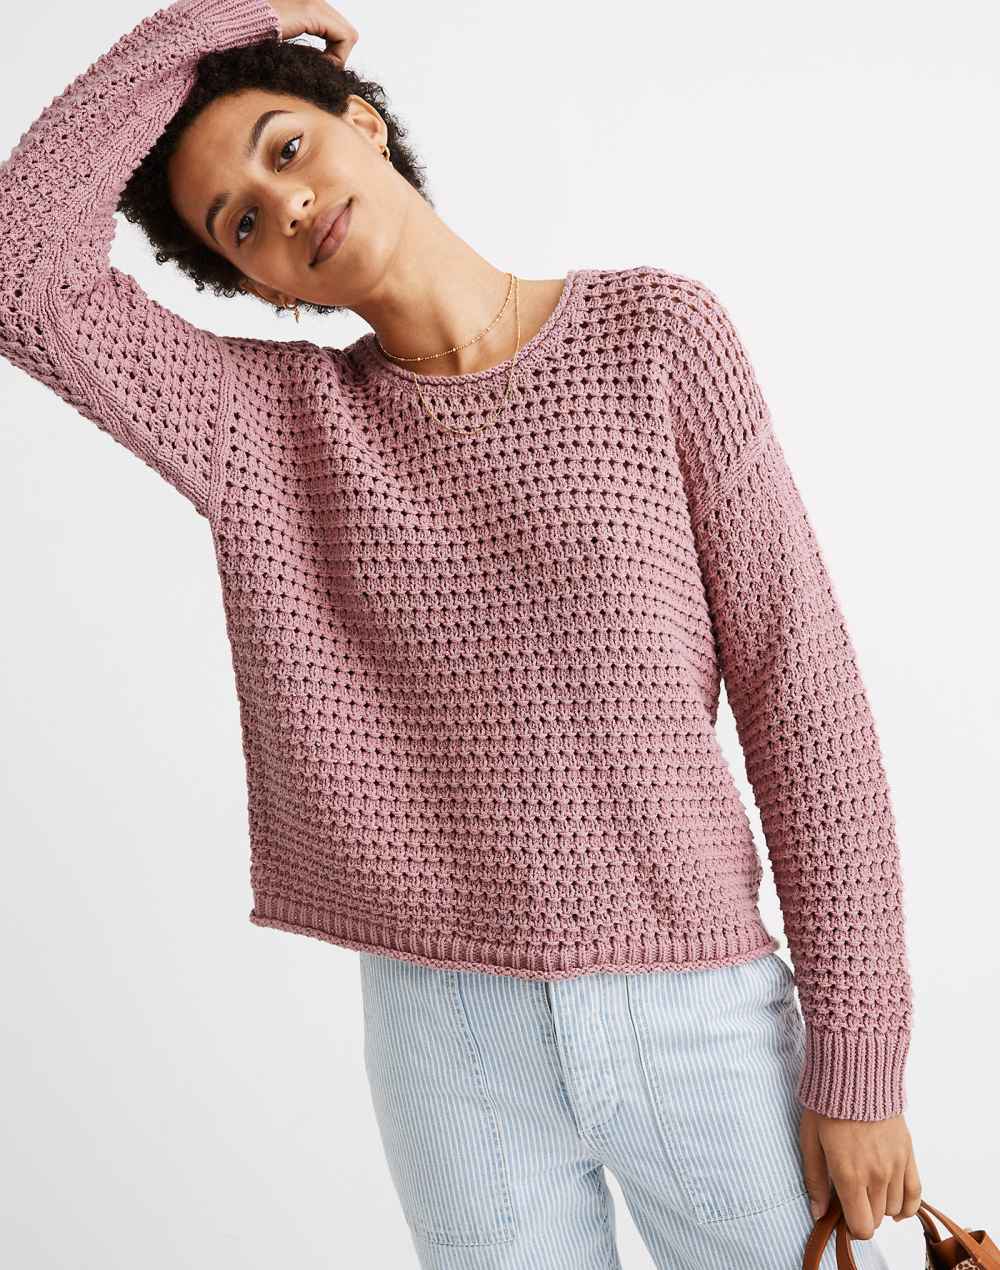 Open-Stitch Austen Pullover Sweater (Weathered Berry)